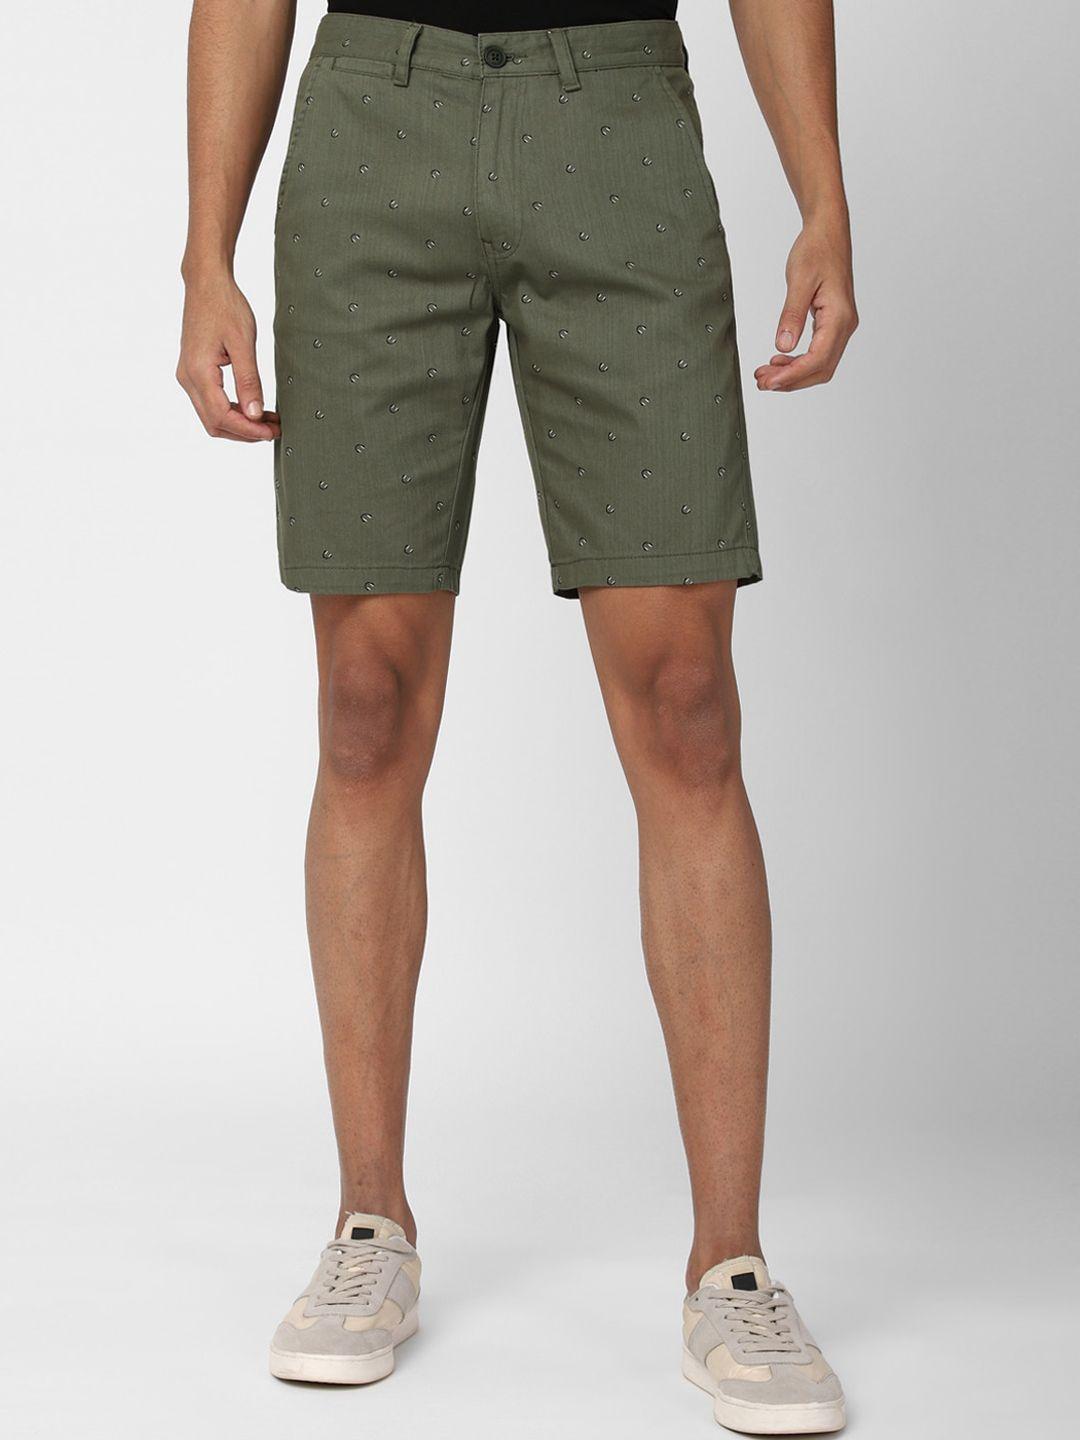 peter england casuals men olive green printed regular fit shorts